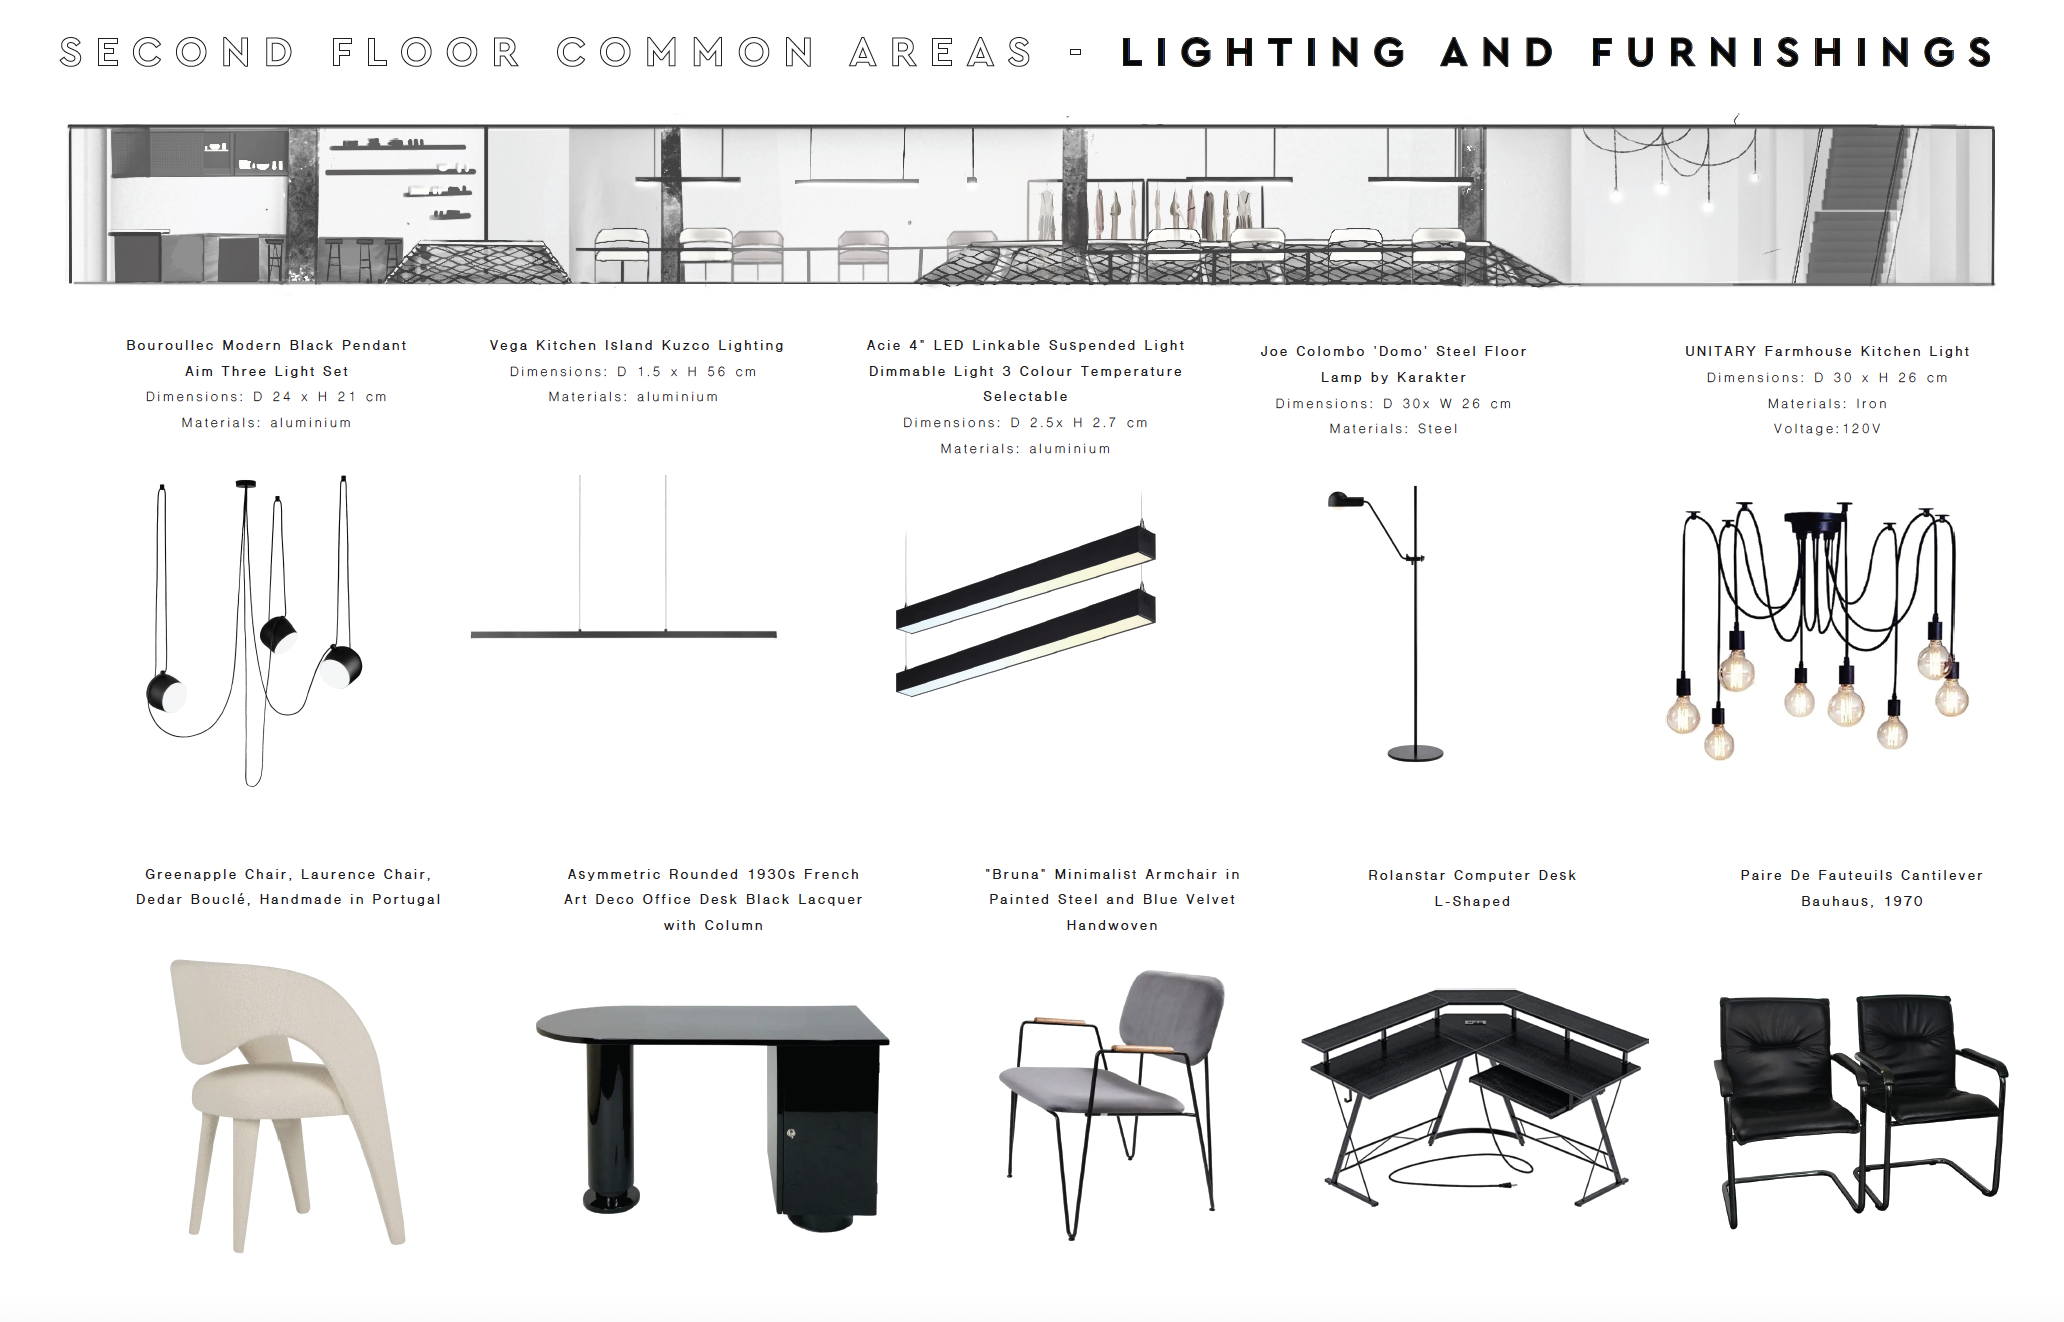 Lighting and Furnishings Specifications (Amanda Stan)